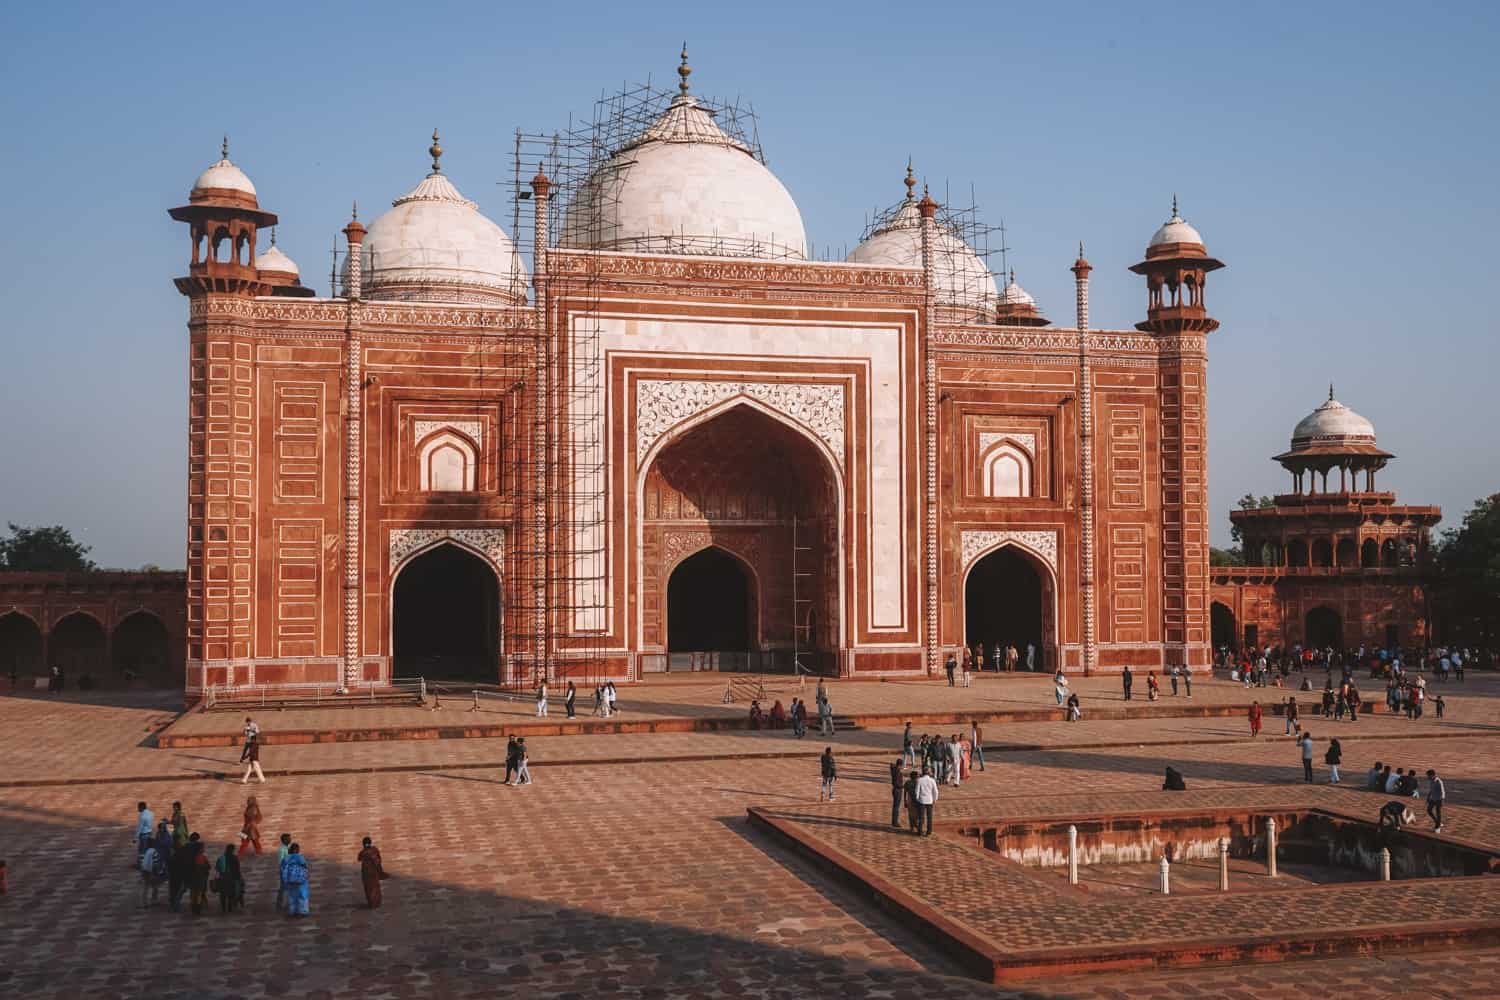 Gate at the Taj Mahal